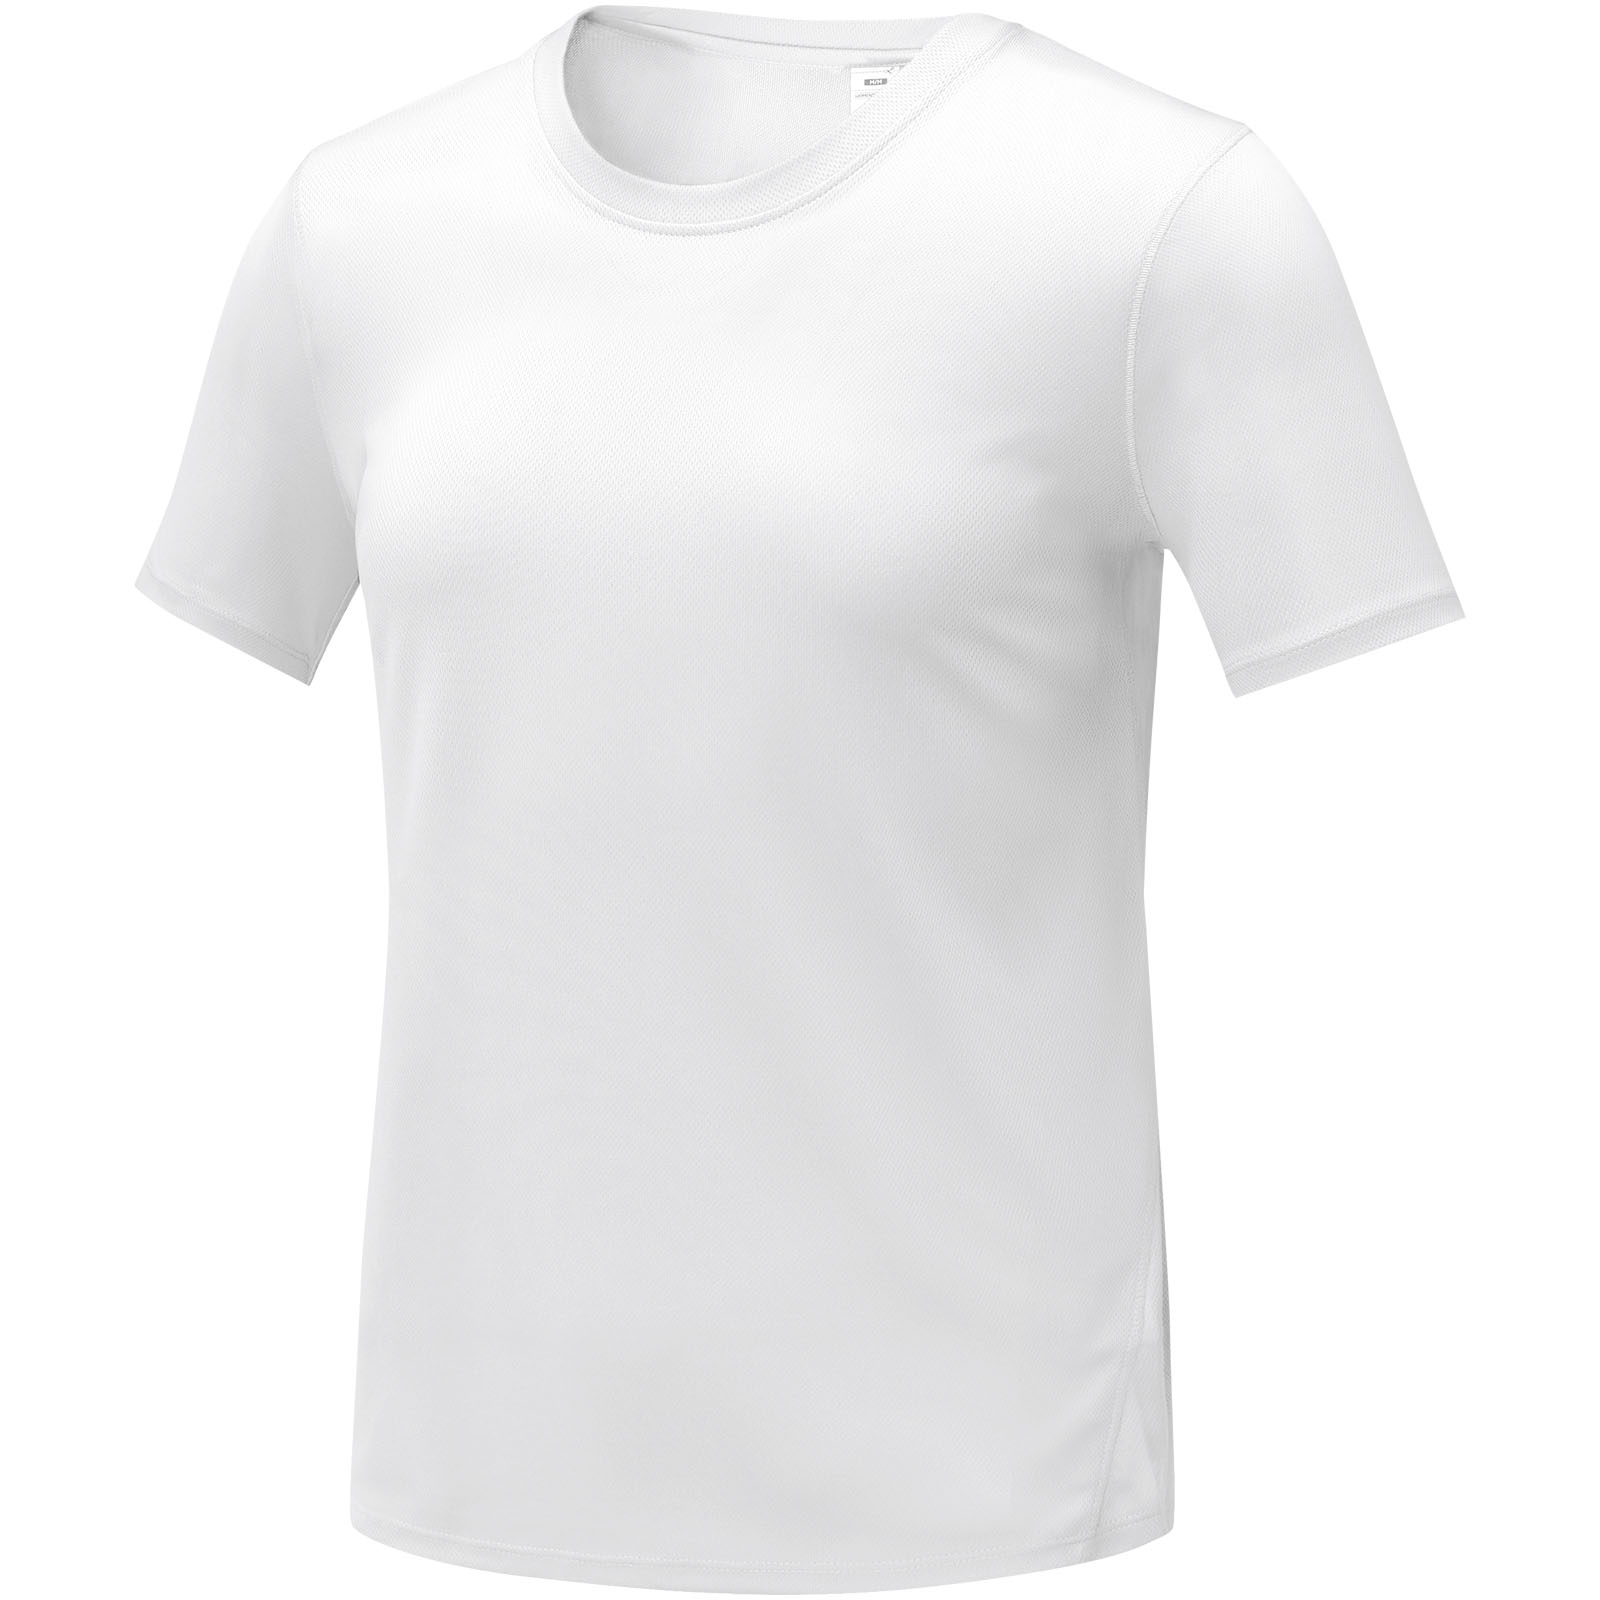 Clothing - Kratos short sleeve women's cool fit t-shirt